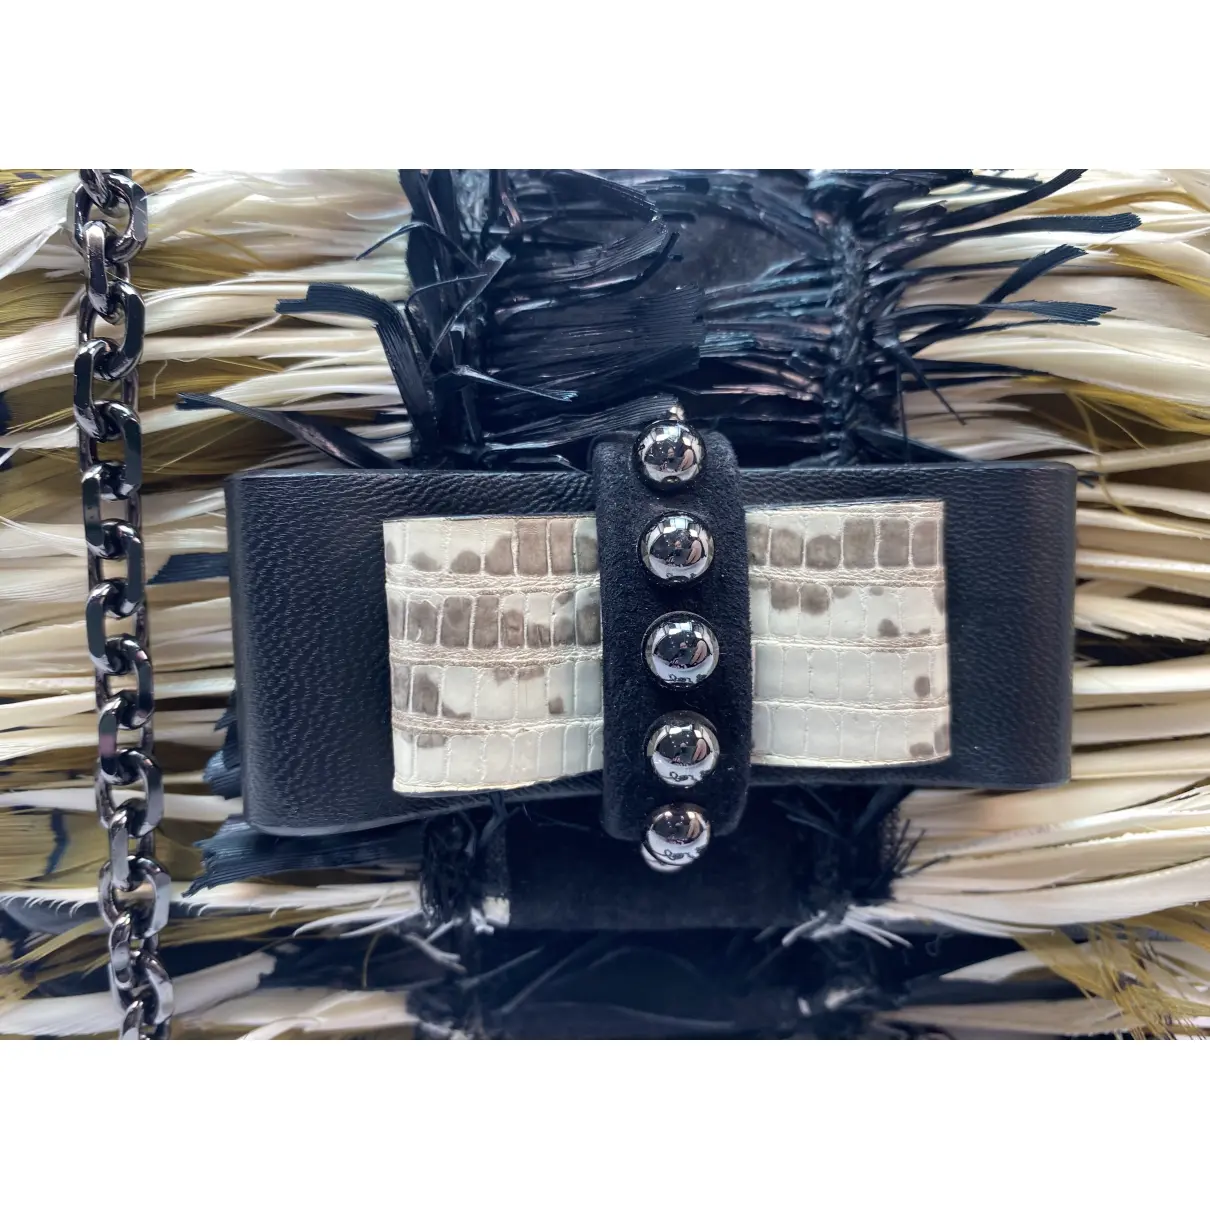 Buy Christian Louboutin Sweet Charity leather handbag online